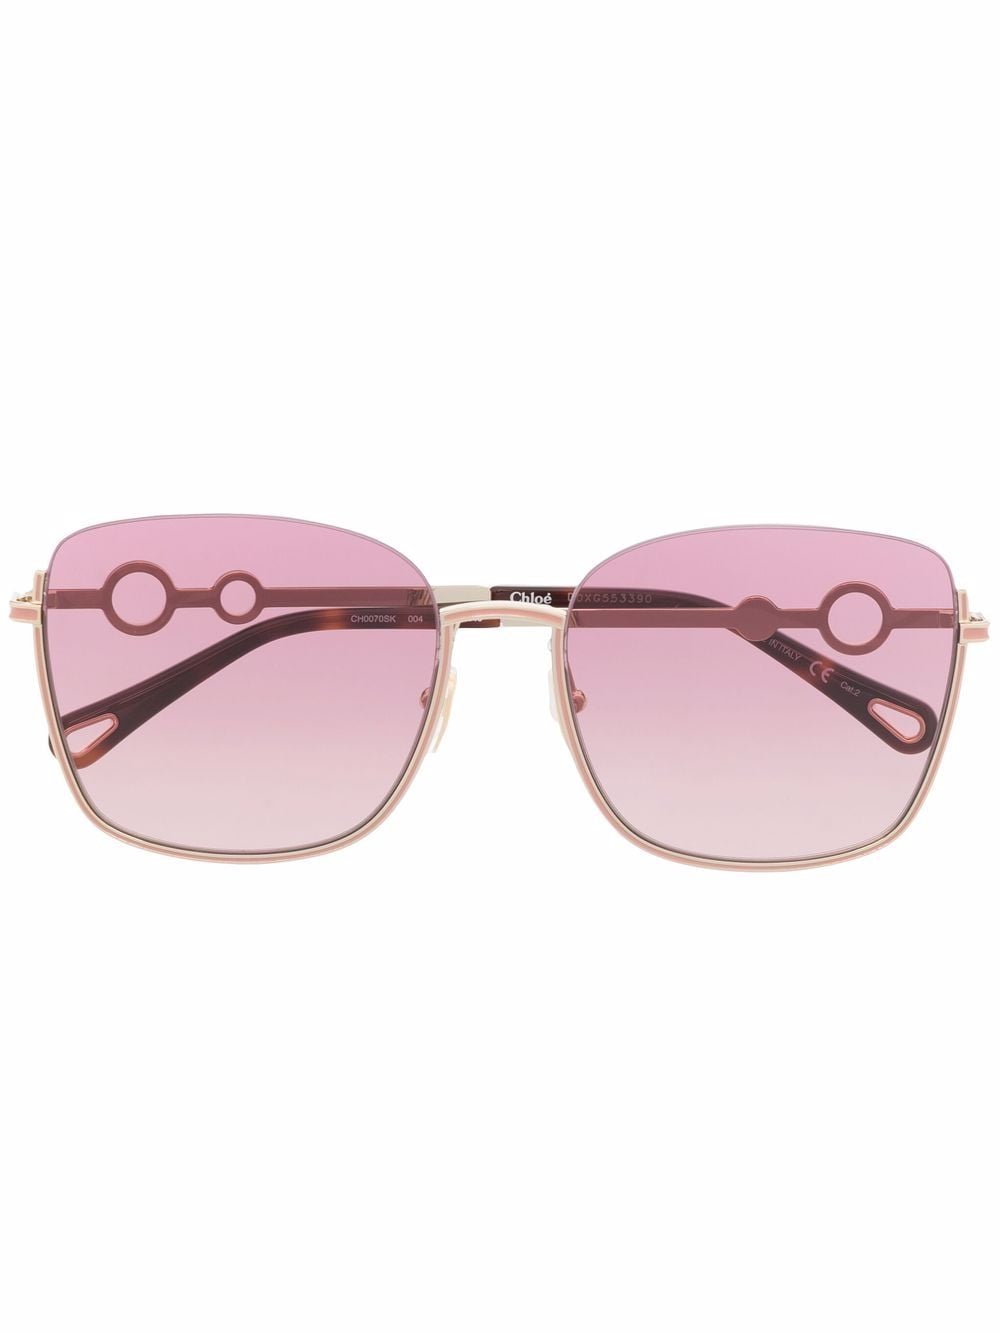 Chloé Eyewear frameless gradient sunglasses - Gold von Chloé Eyewear